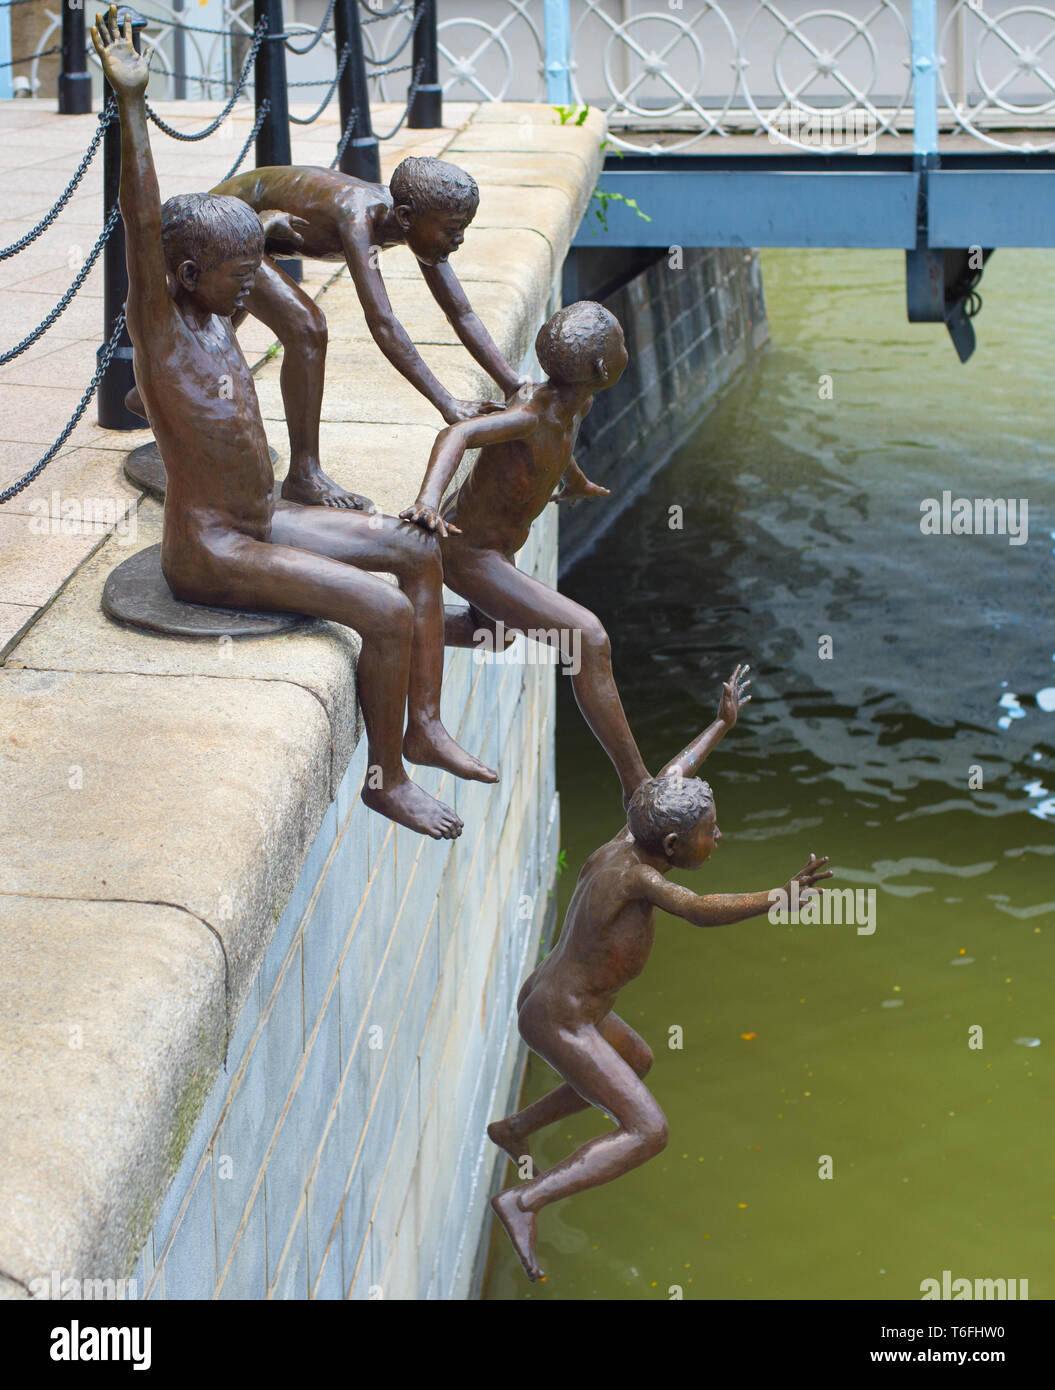 Children jumping river statue, Singapore Stock Photo